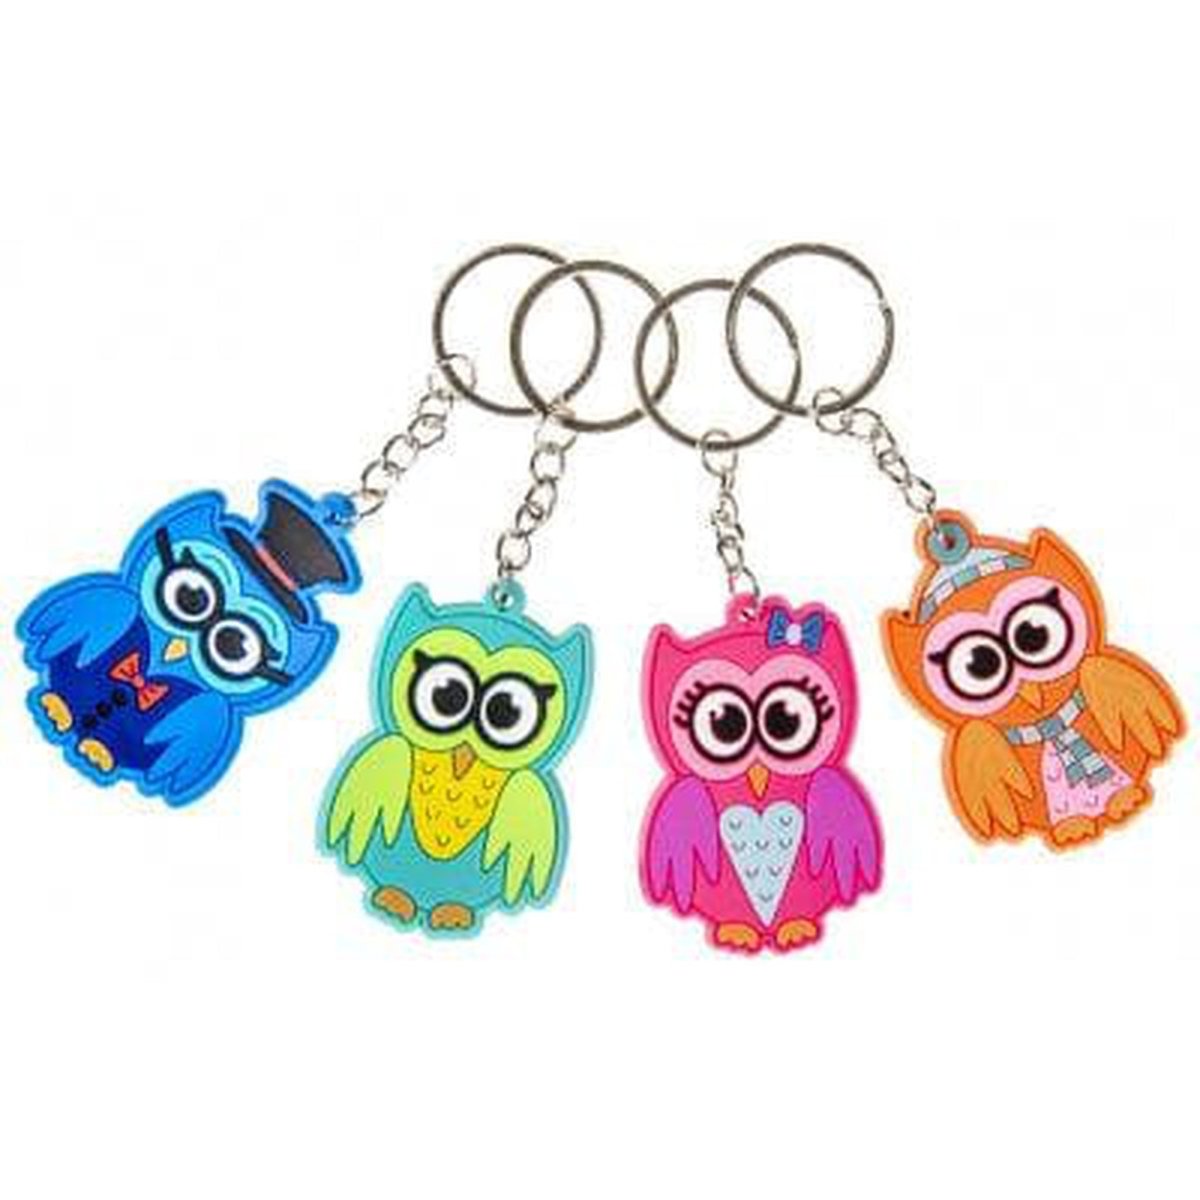 Owl Novelty Keychain - Kids Party Craft